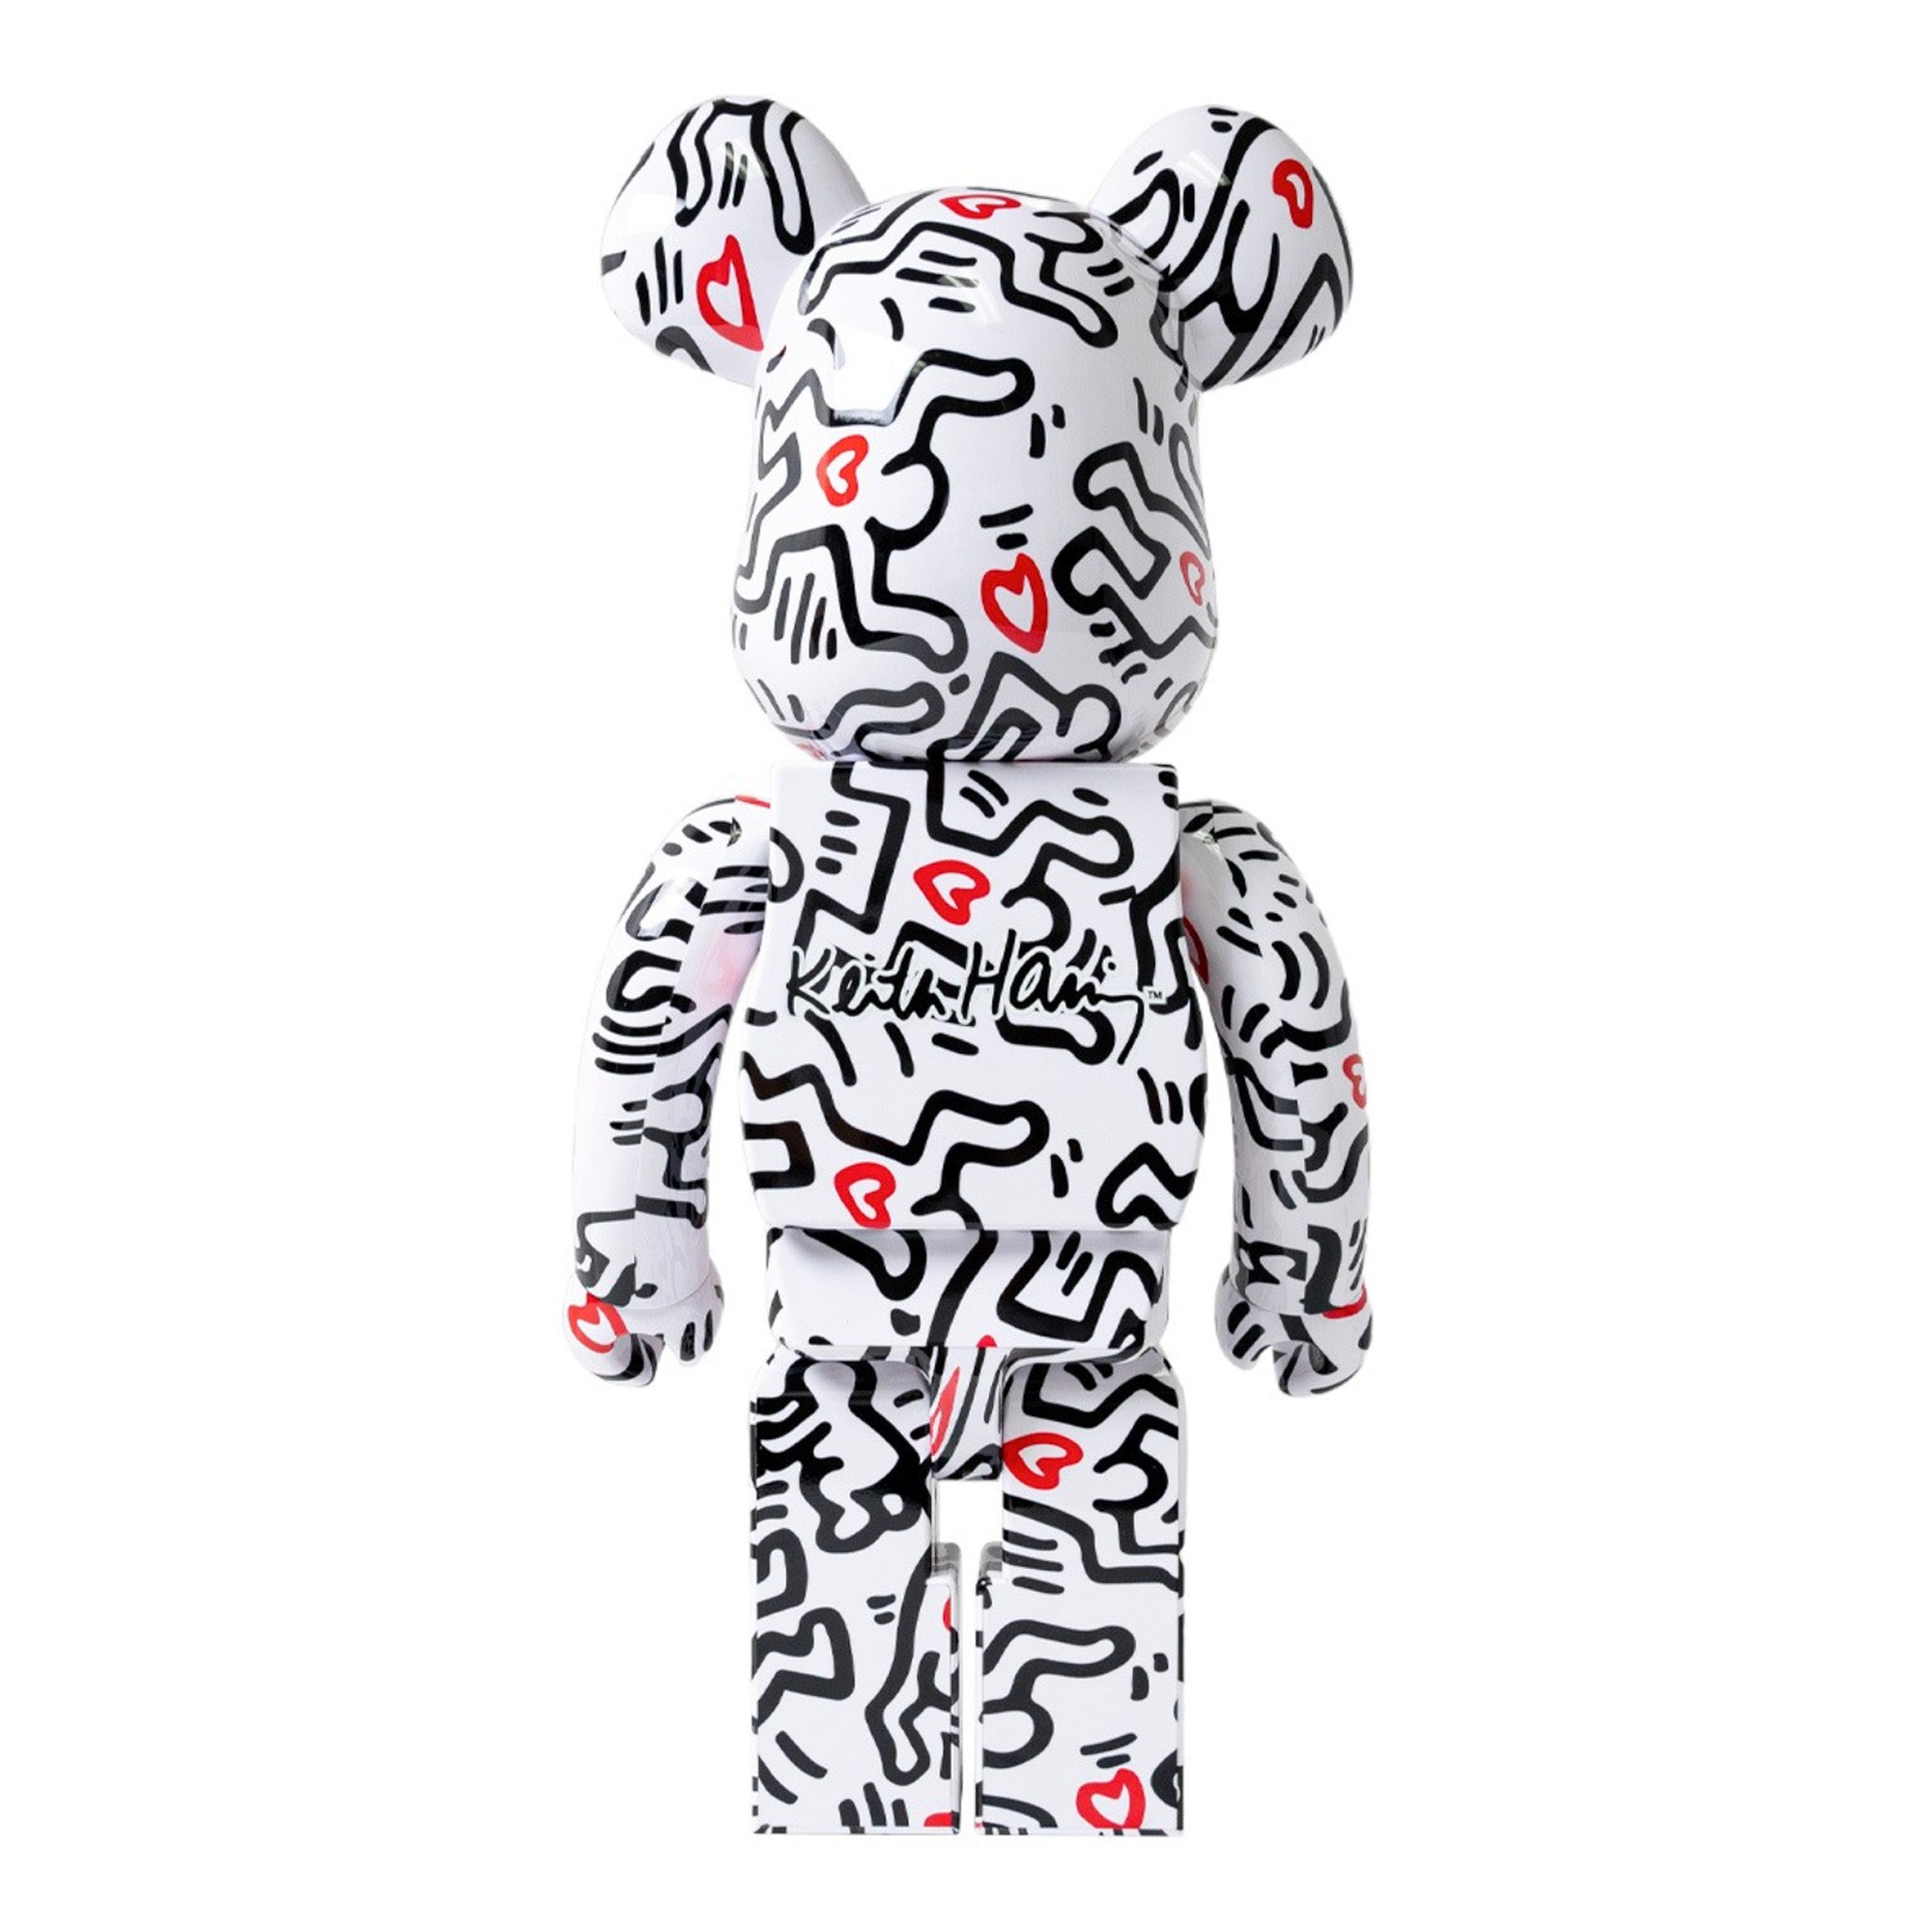 MEDICOM TOY: BE@RBRICK - Keith Haring #8 1000%